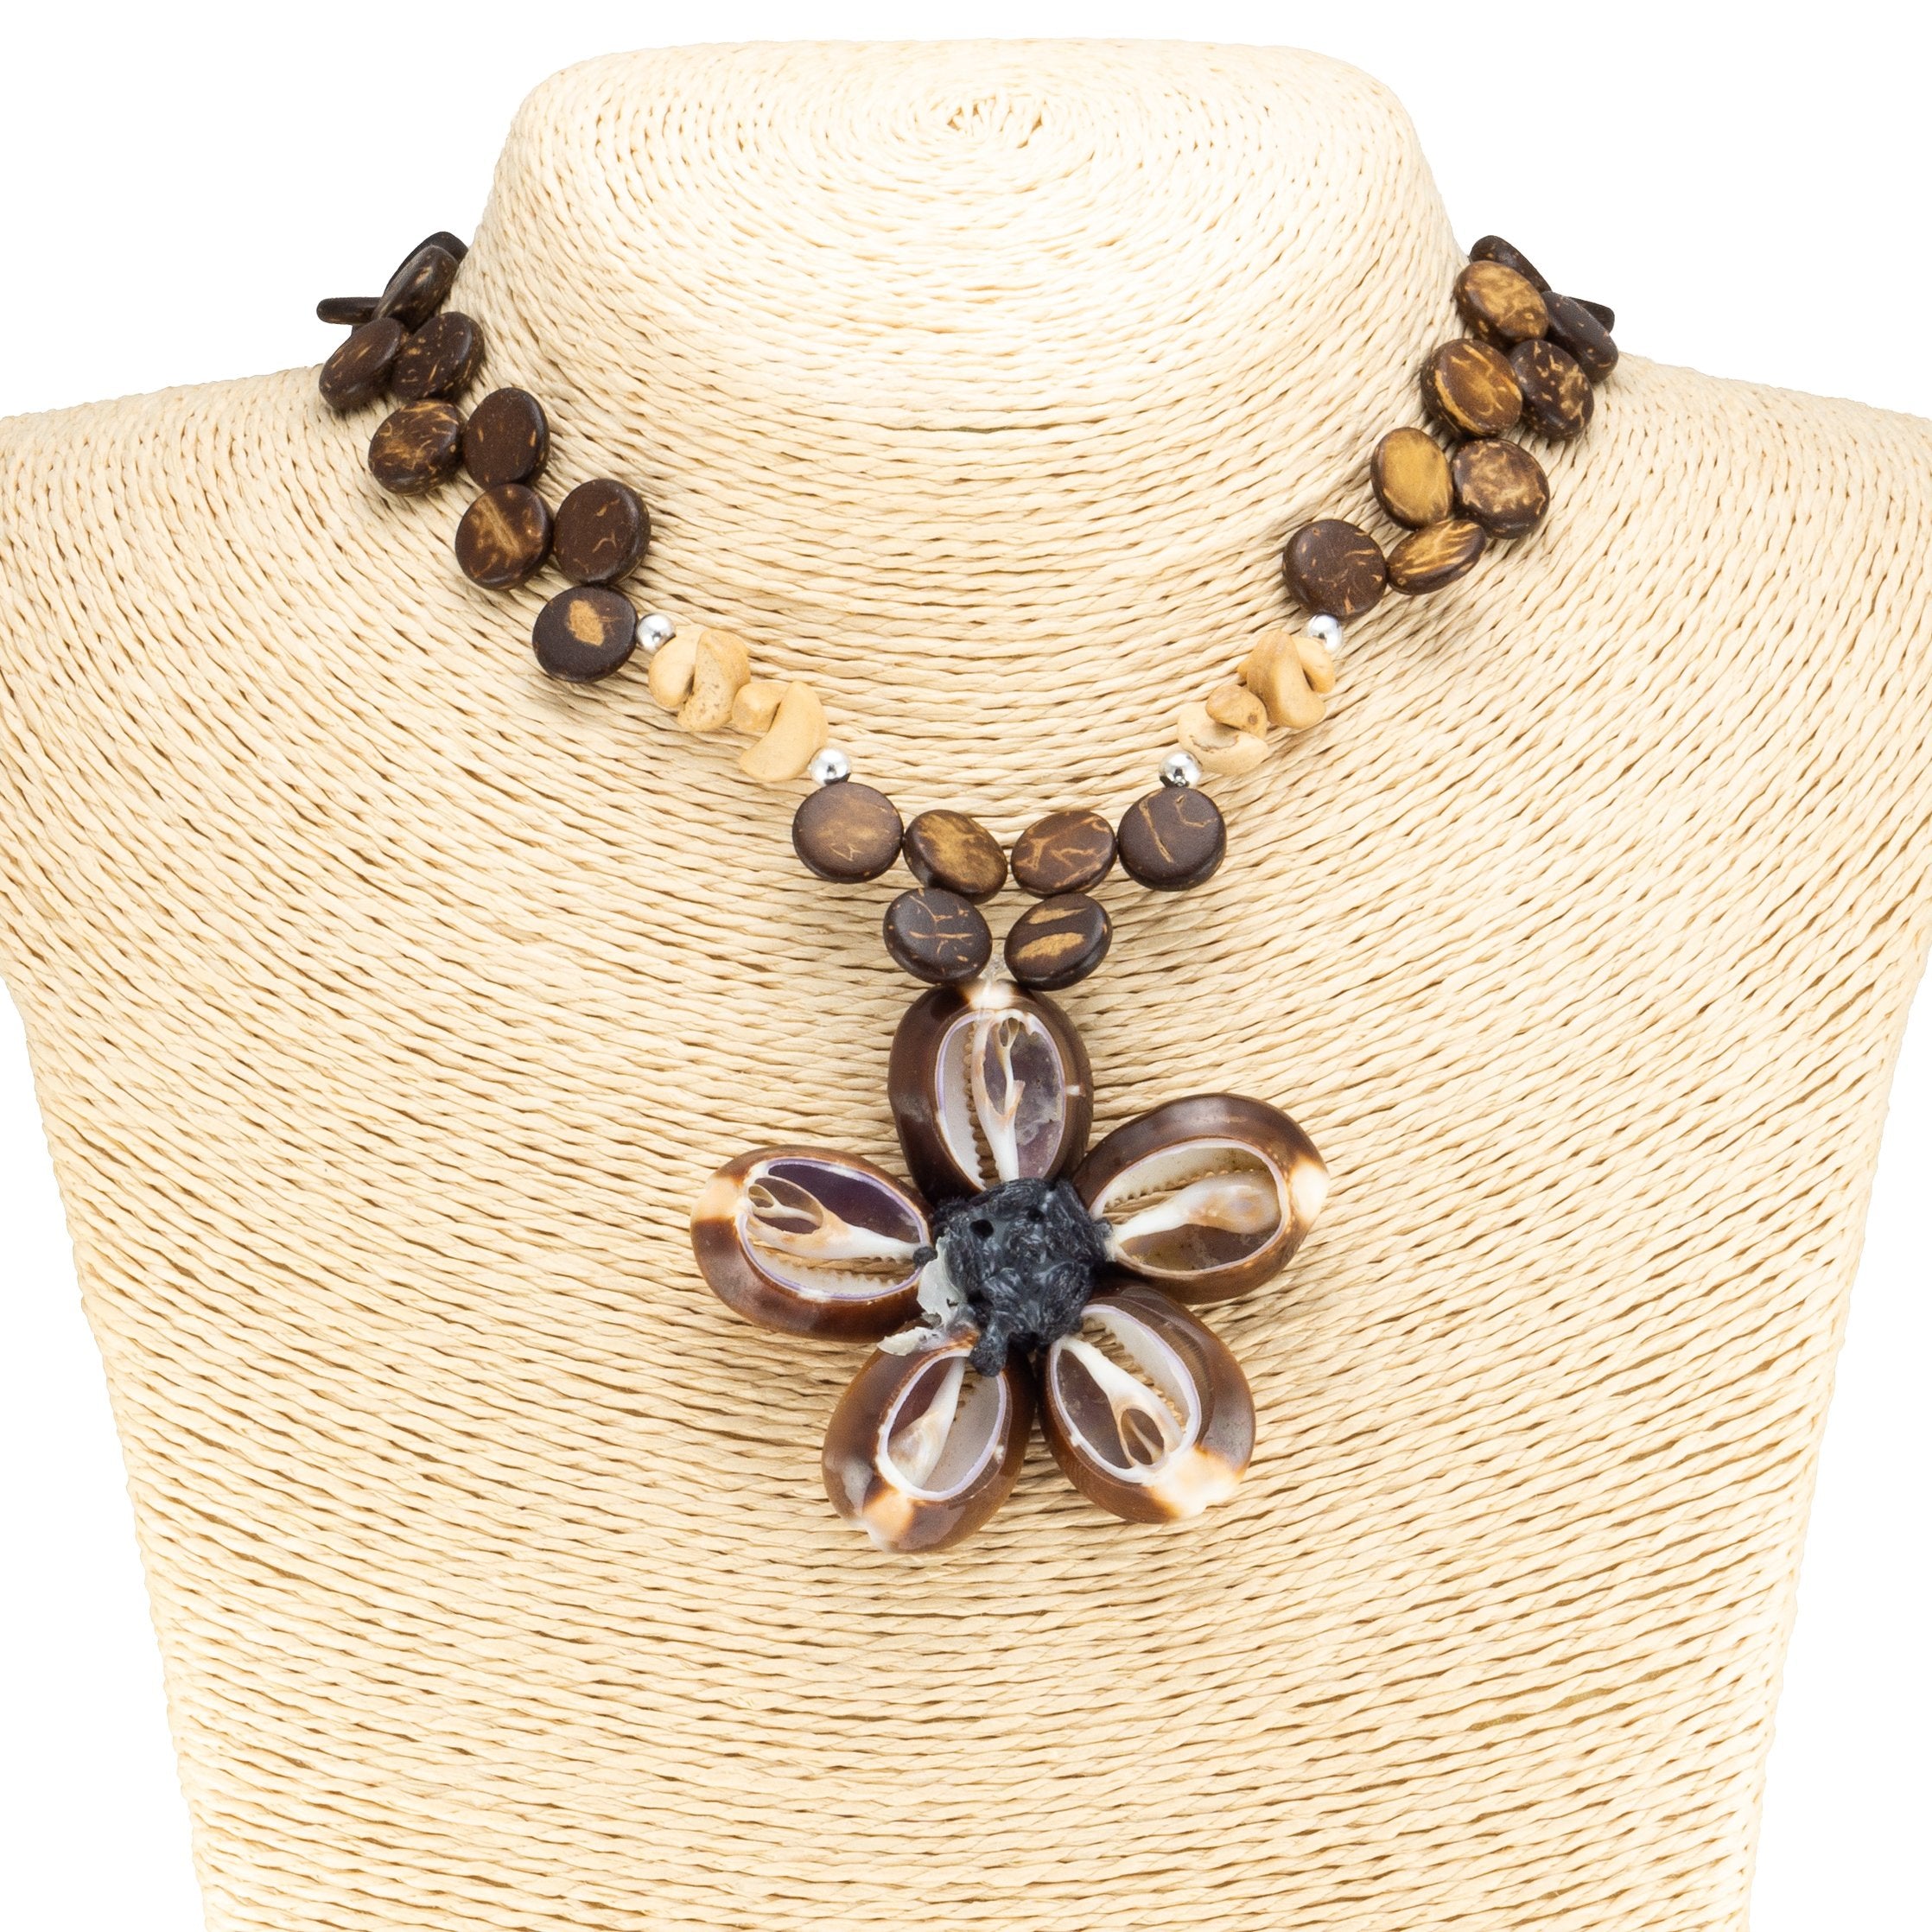 Kaput Shells Flower Pendant on Wood Disc Beads Necklace